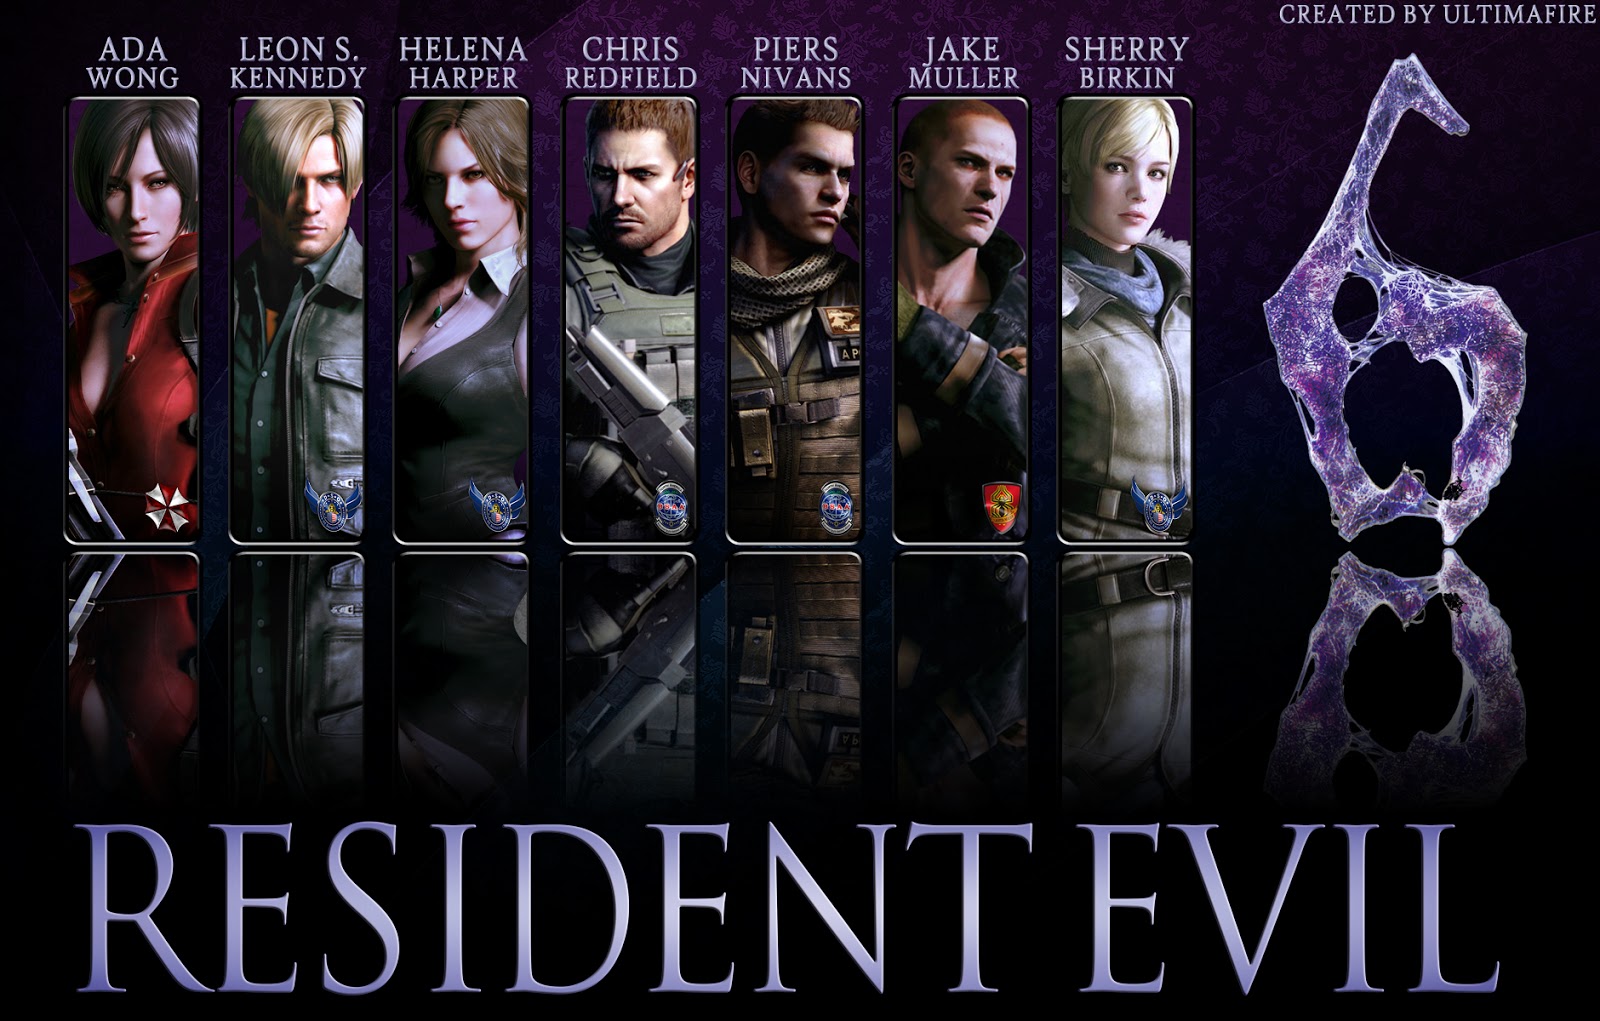 Resident Evil 6: The Final Chapter ALL Trailer 2017